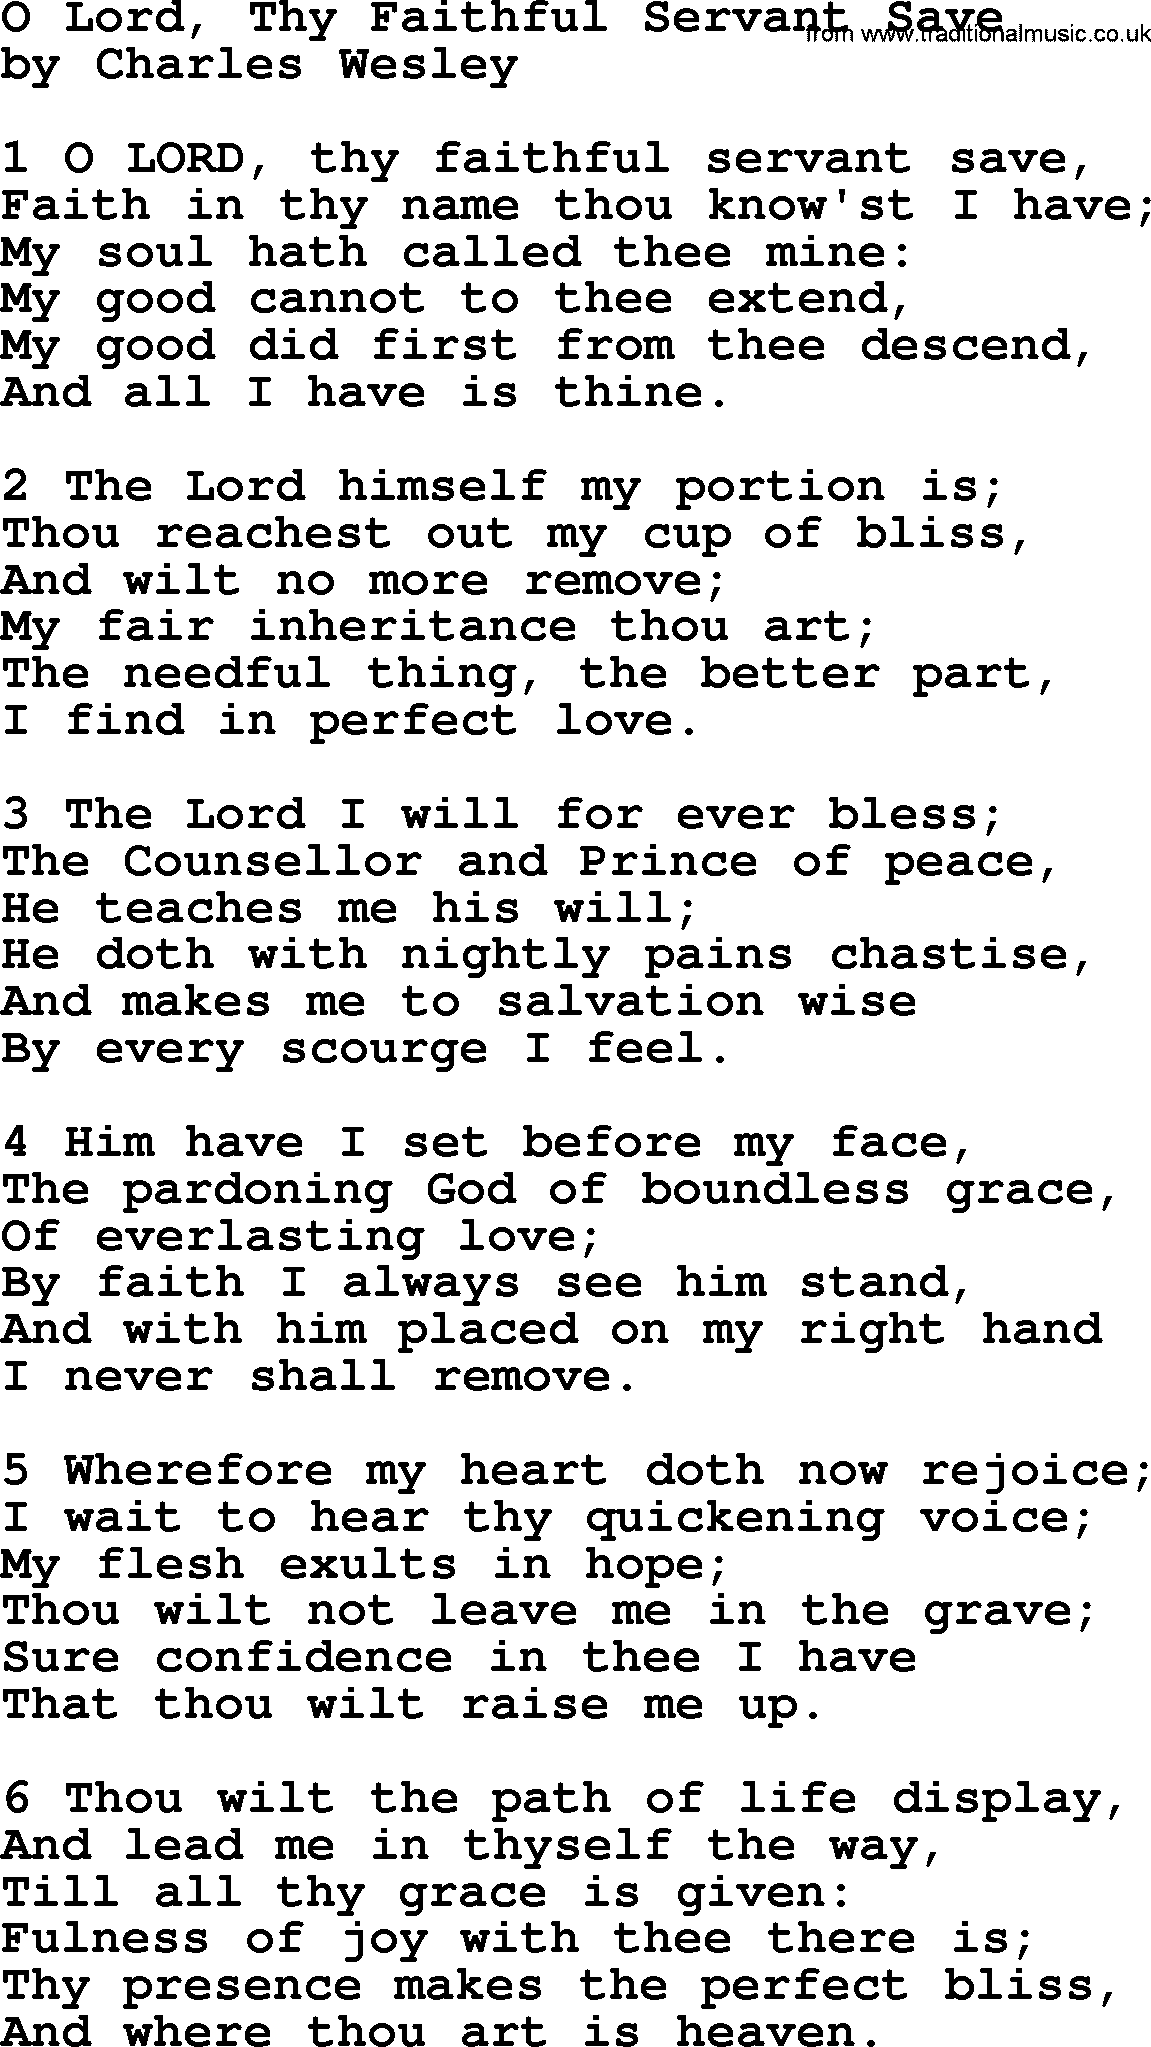 Charles Wesley hymn: O Lord, Thy Faithful Servant Save, lyrics